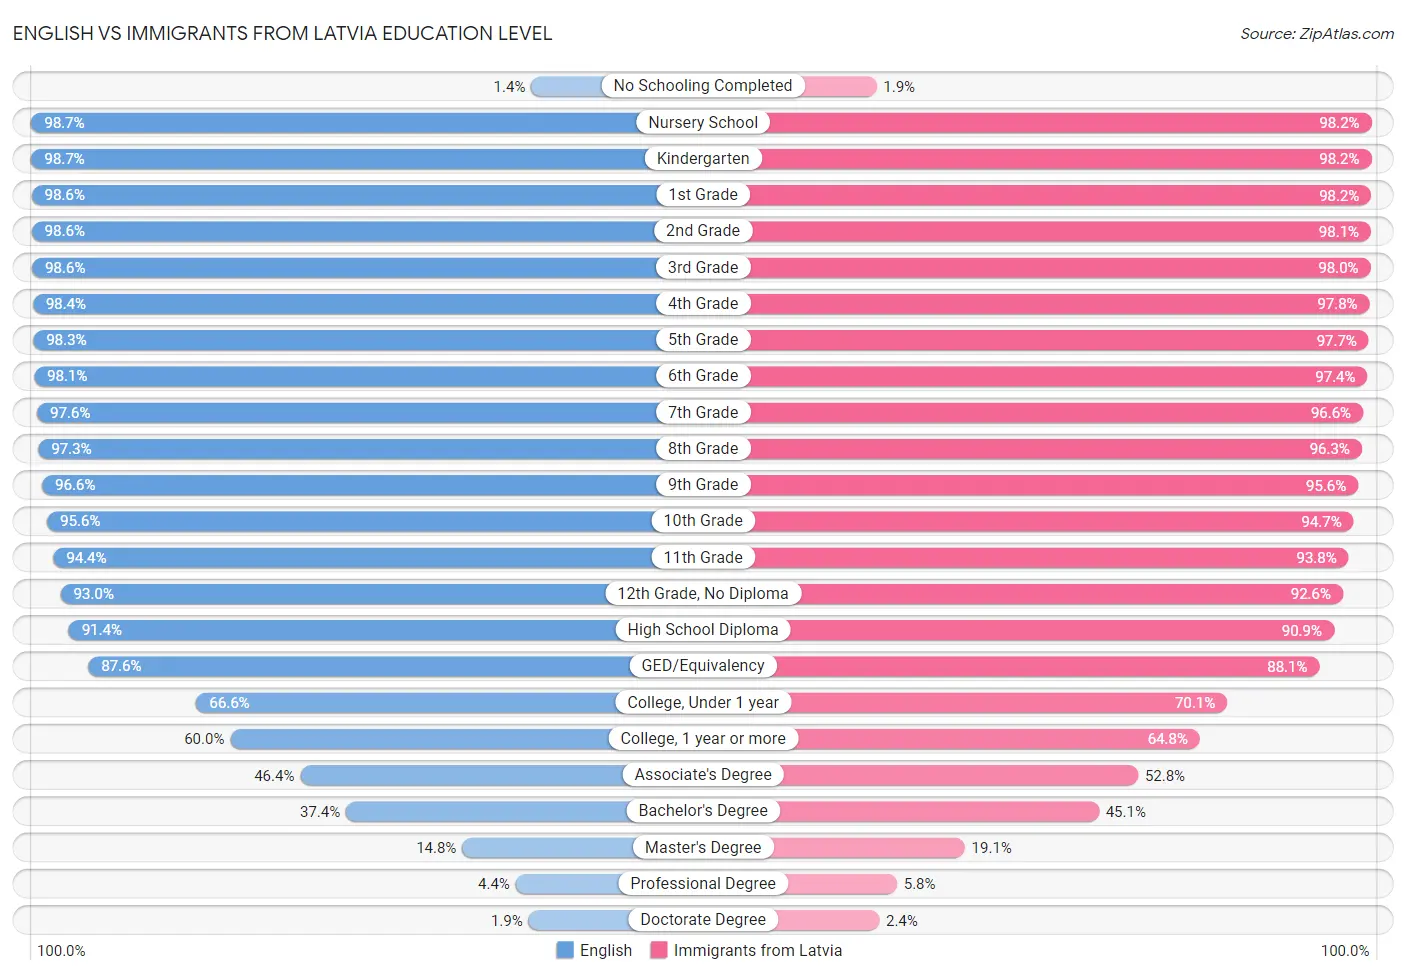 English vs Immigrants from Latvia Education Level